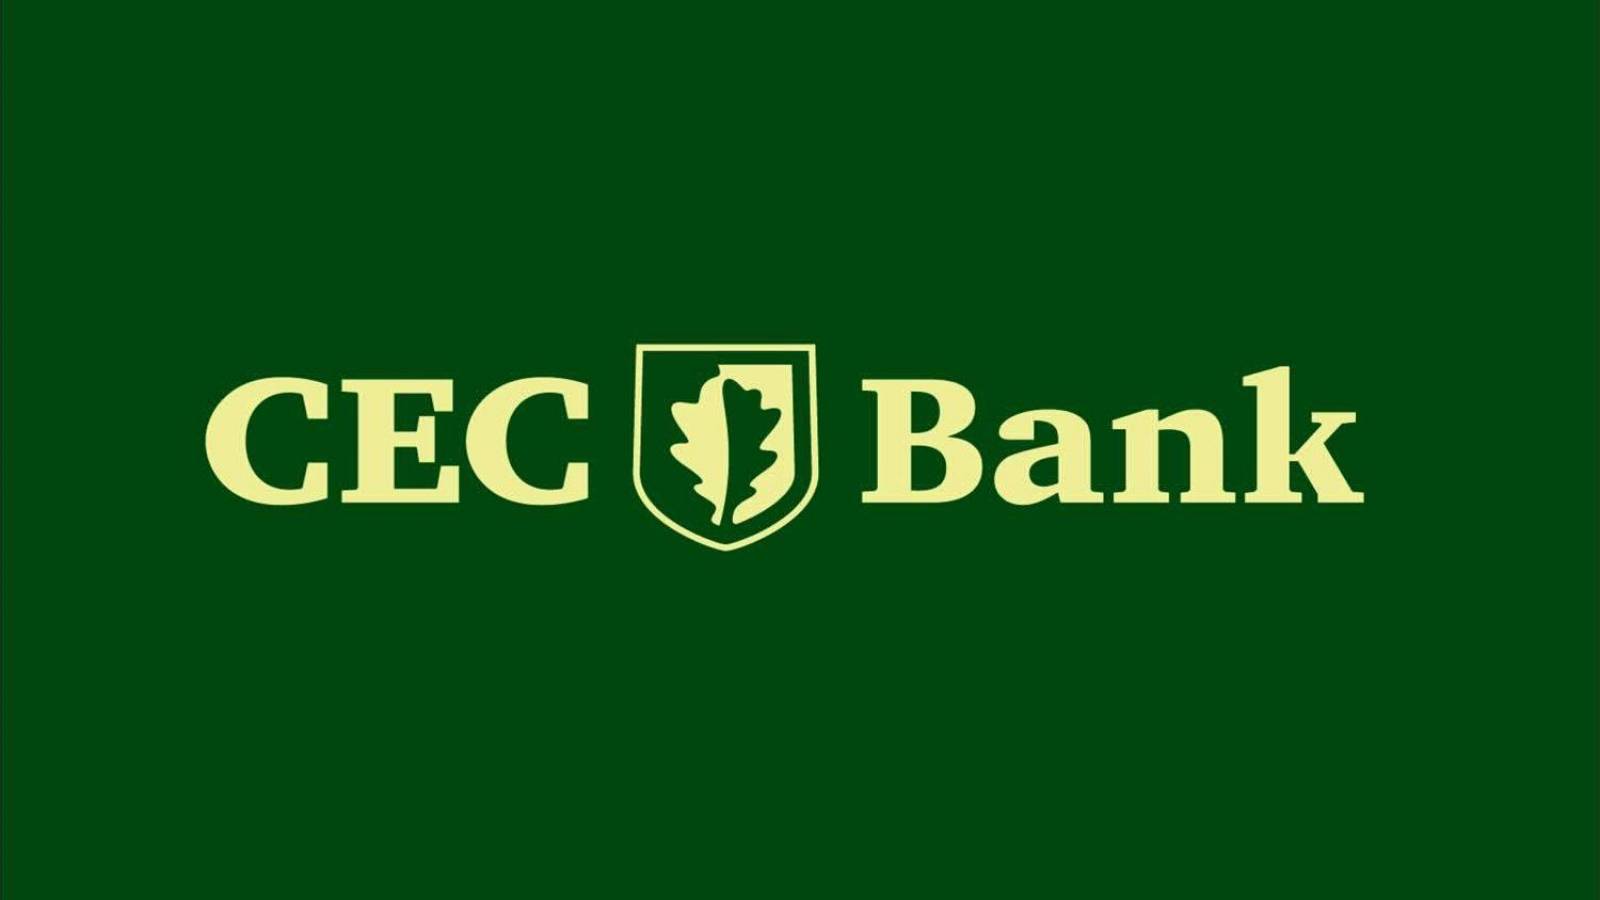 CEC Bank identity